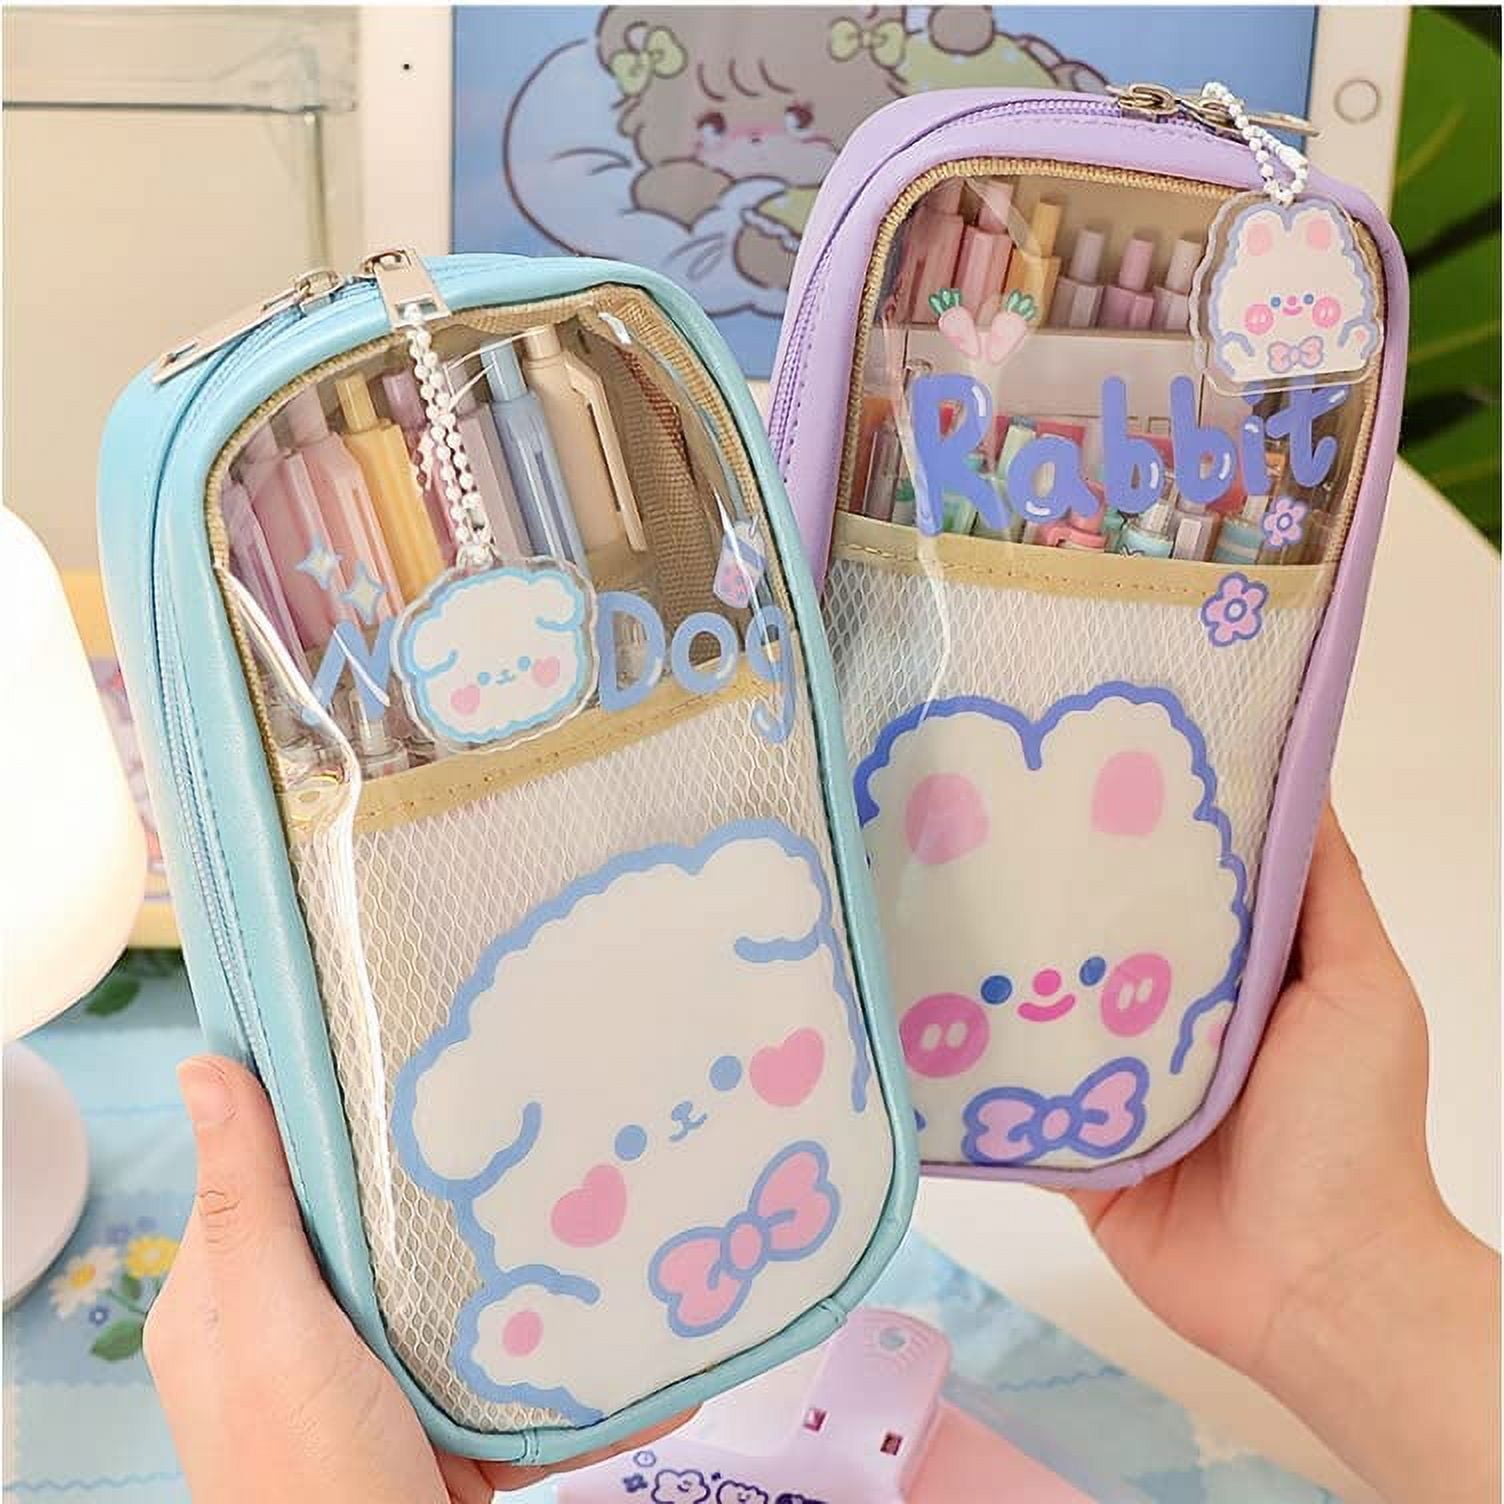 clberni Cute Brown Bear Pencil Case, Aesthetic Pencil Pouch, Kawaii School Supplies Makeup Bag for Girl Women Adult, Size: 8.54 x 4.52 x 2.36